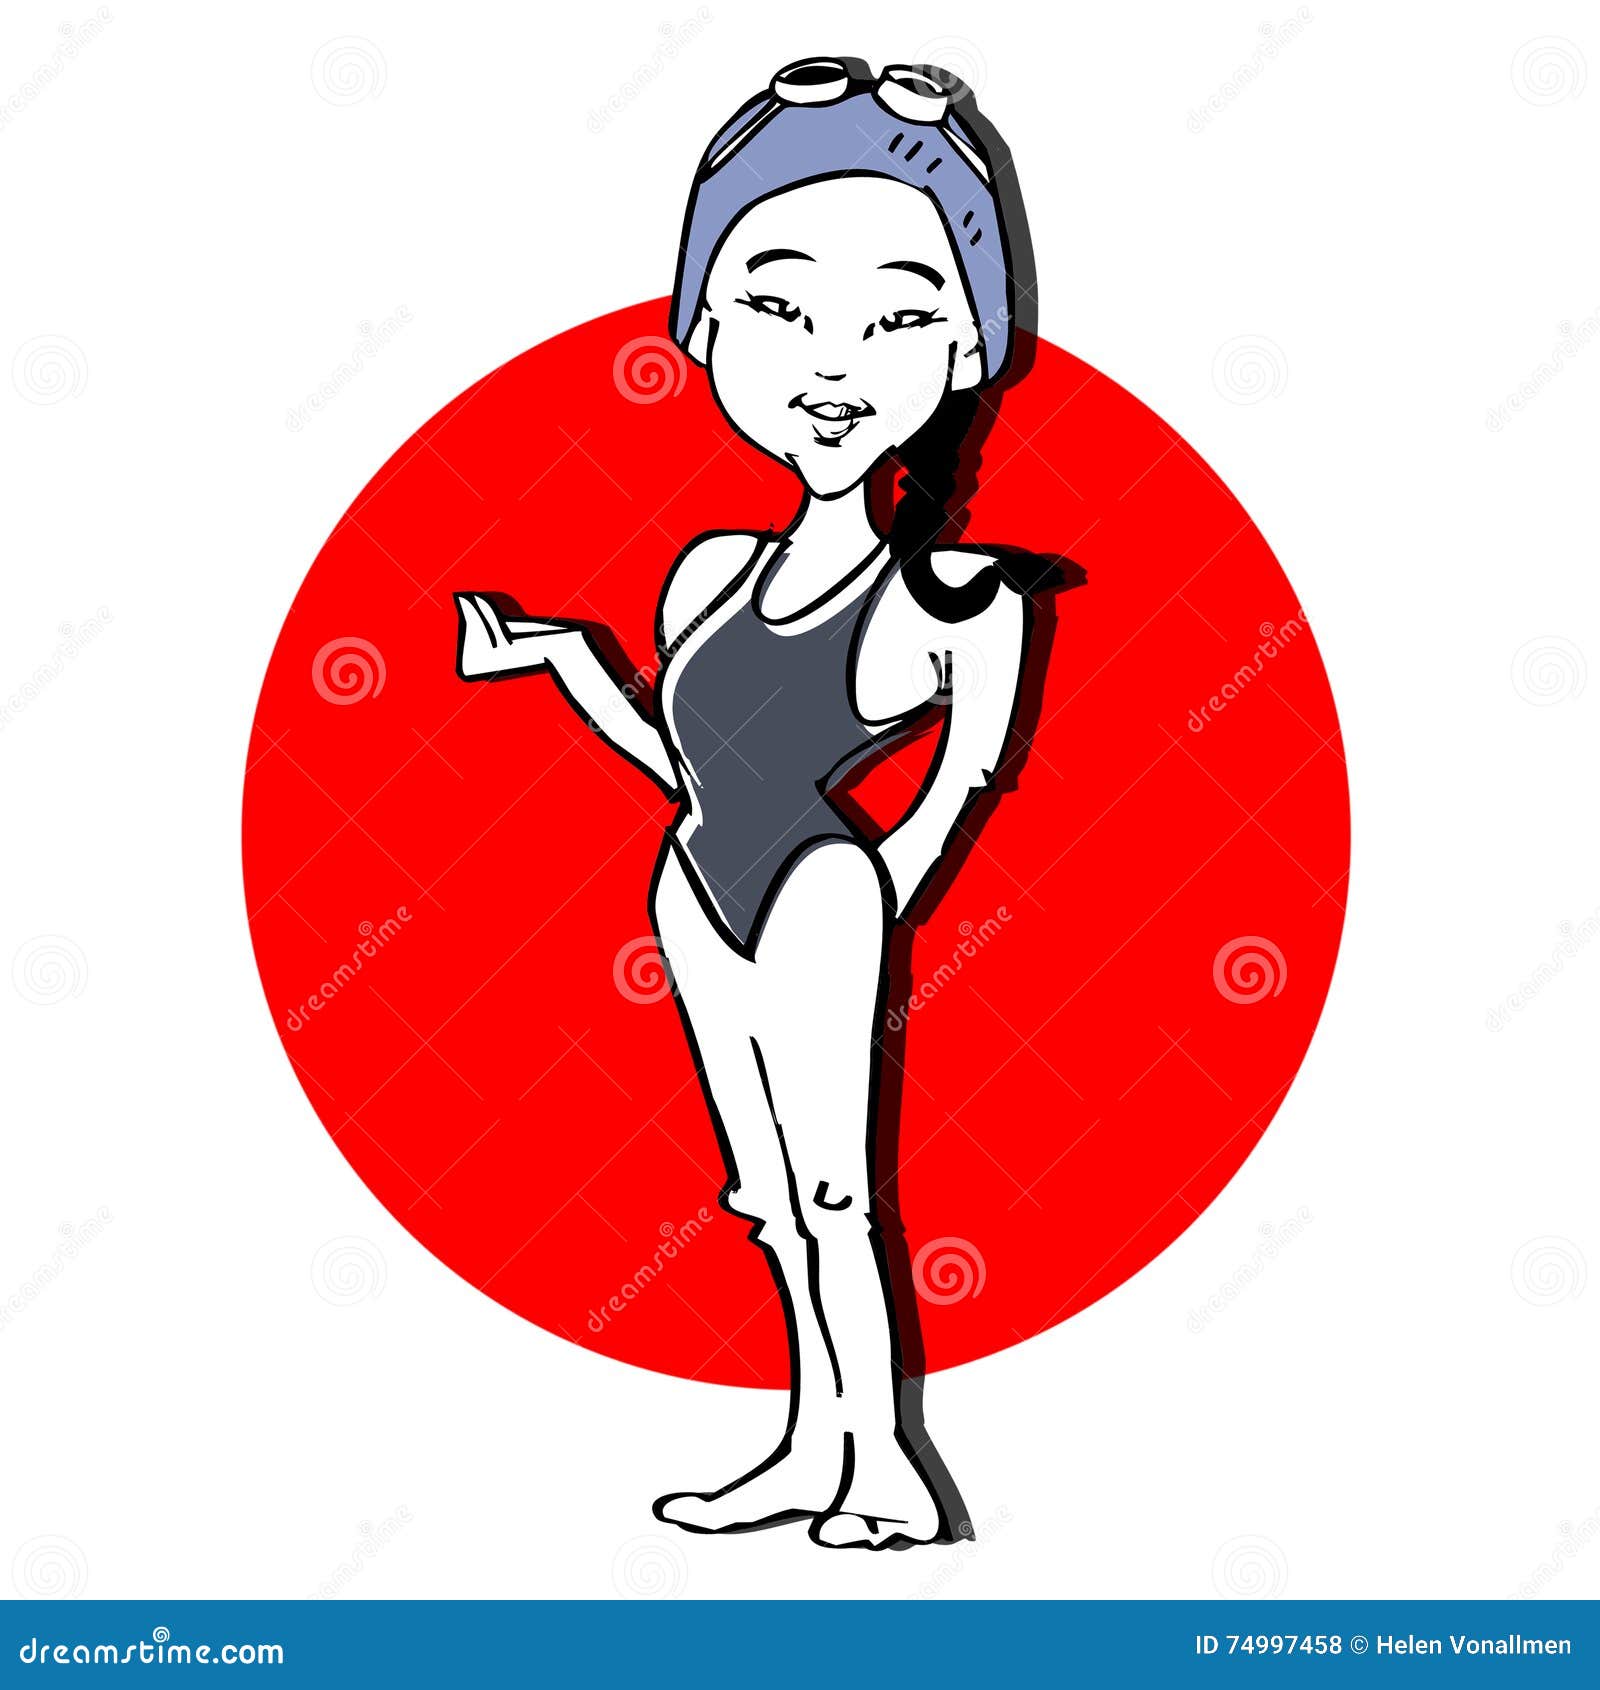 cartoon of swimmer asian woman